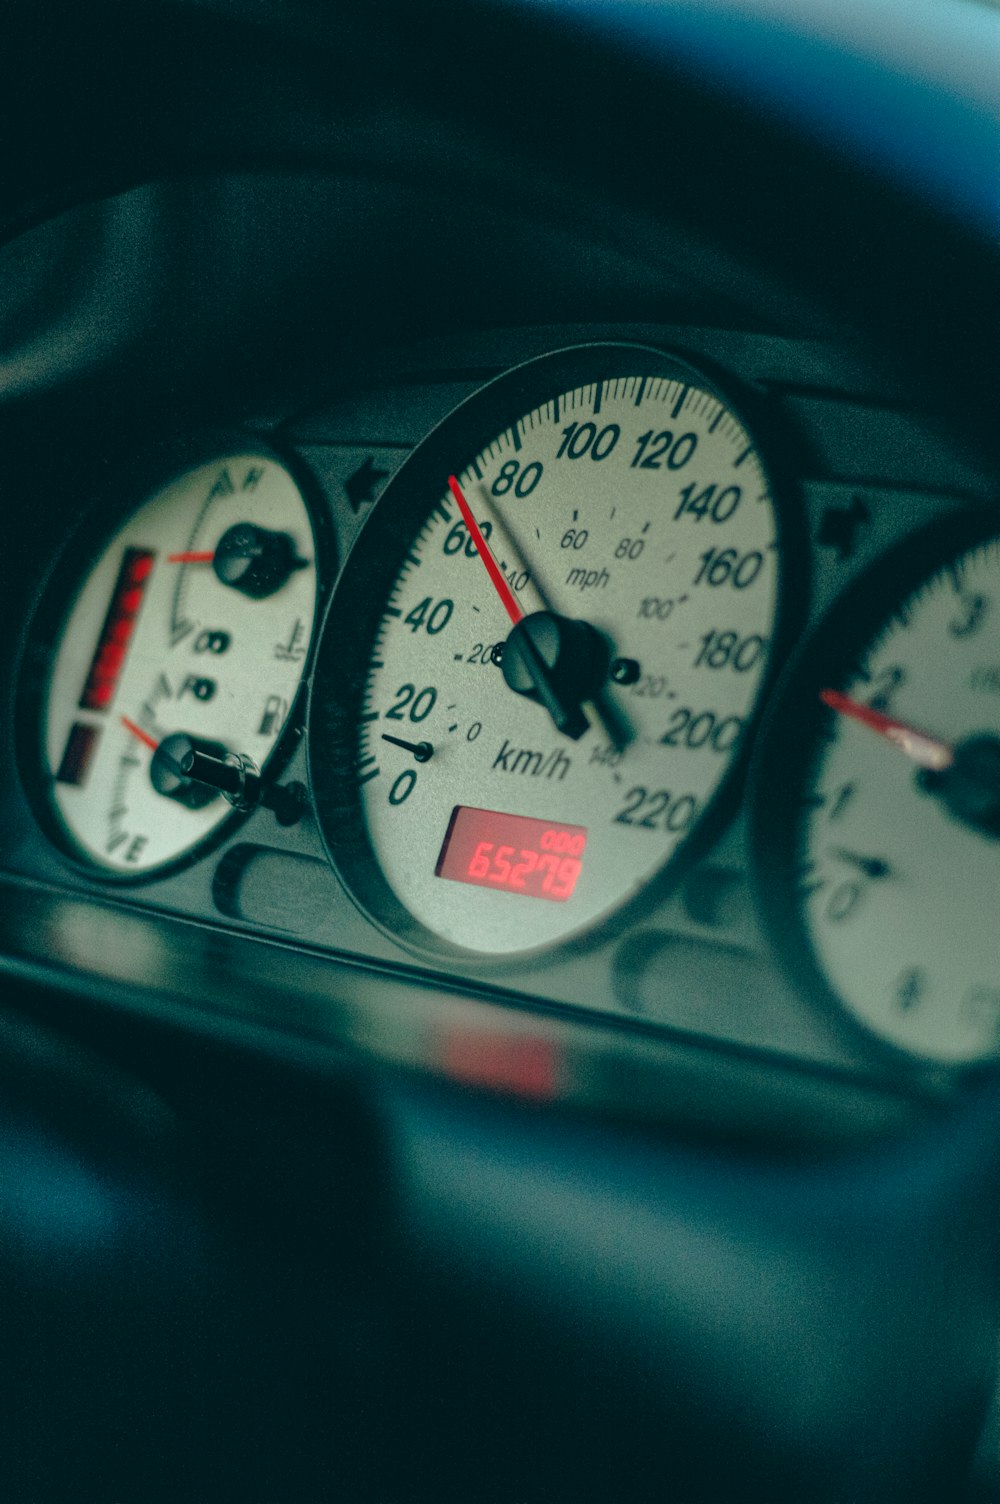 a close up of a speedometer in a car